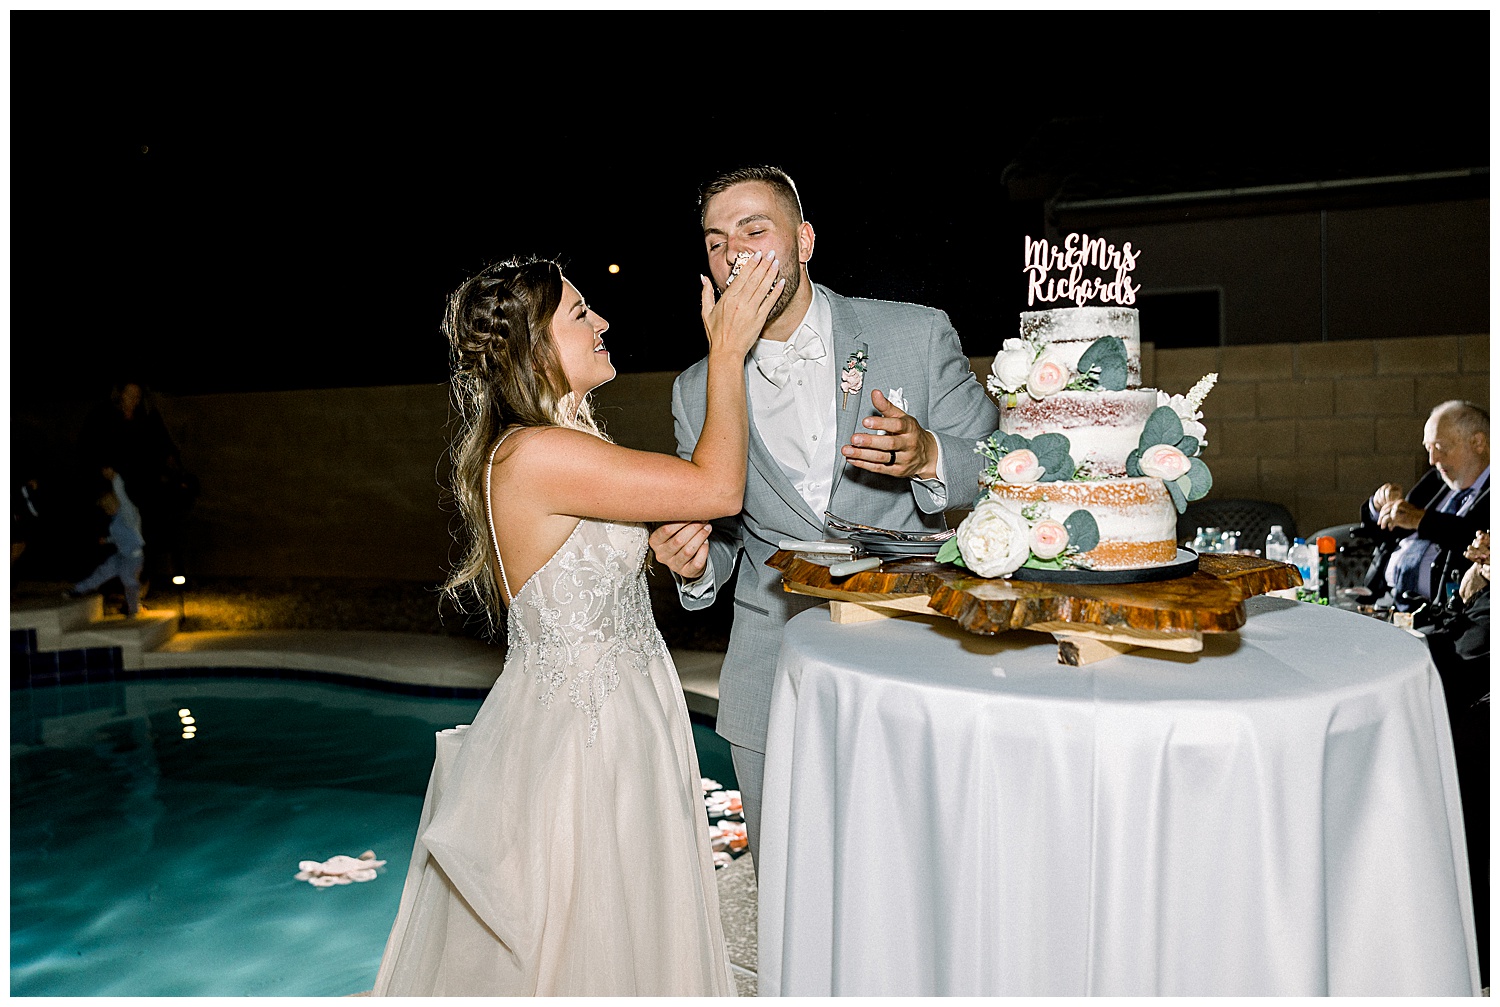 Estate Wedding in Arizona, Cake cutting and smash